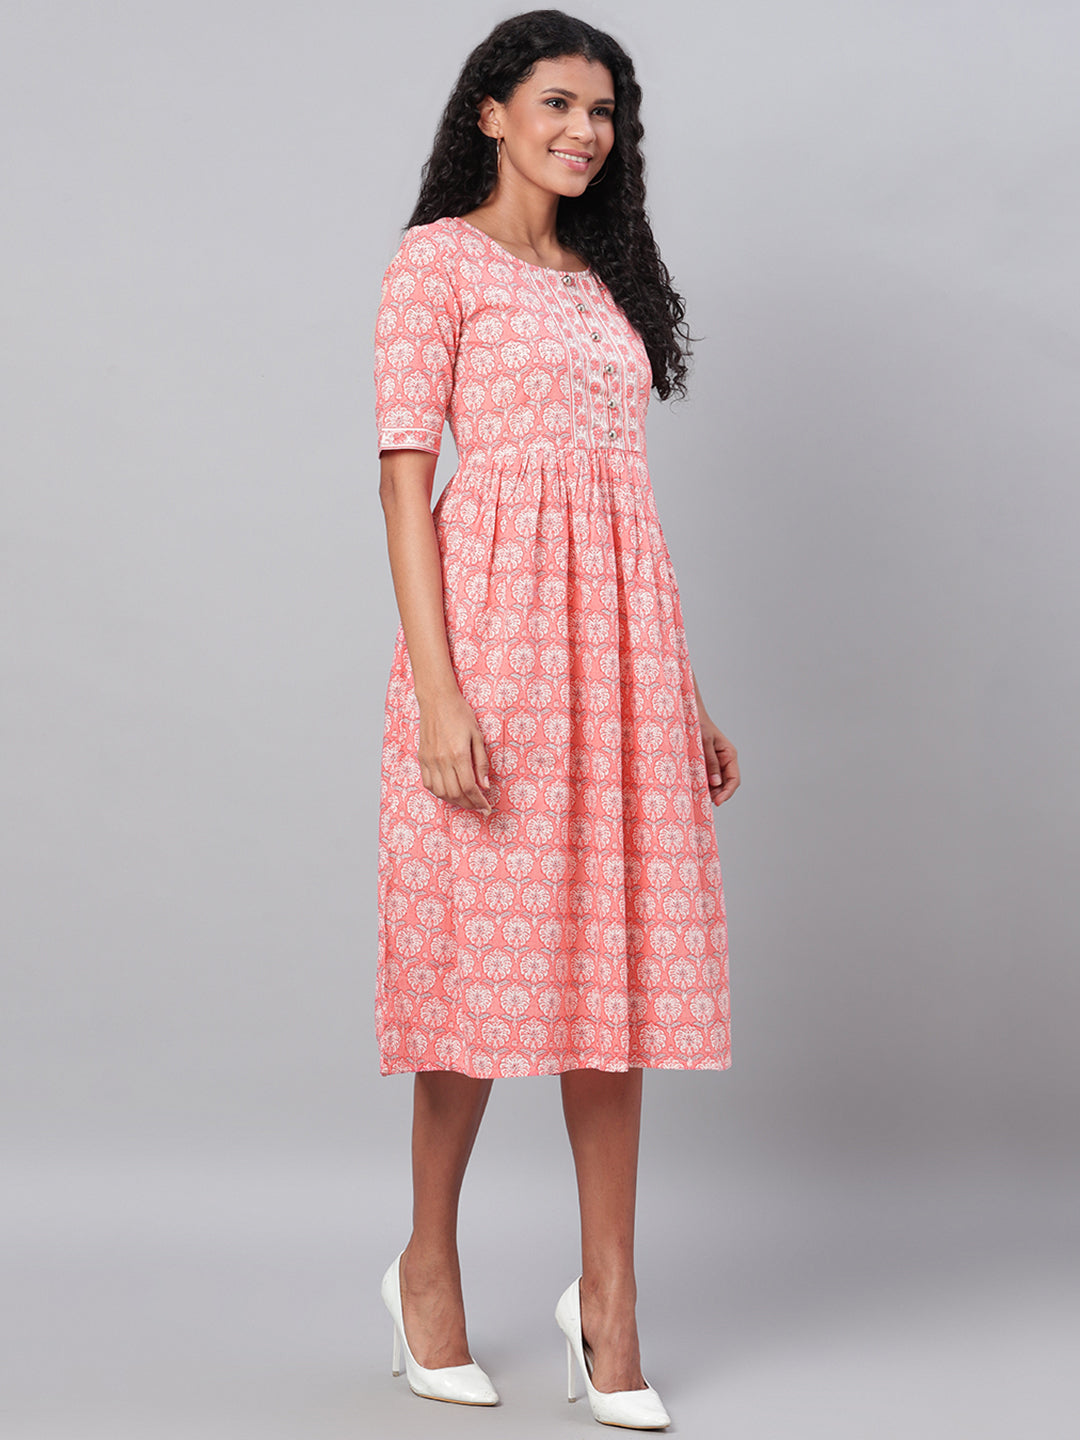 Myshka Women's Pink Printed 3/4 Sleeve Cotton Round Neck  Dress